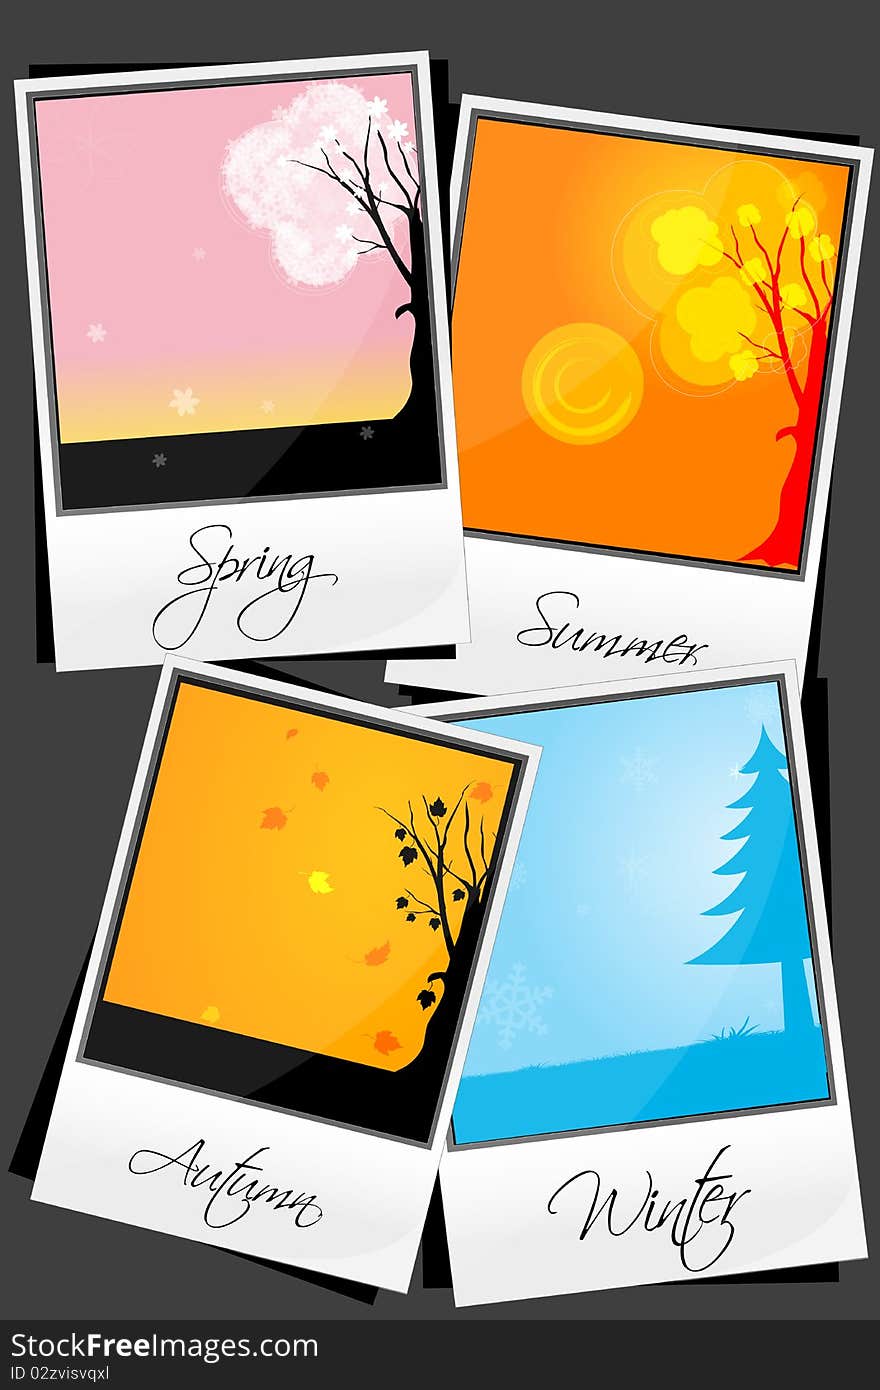 Illustration of types of season